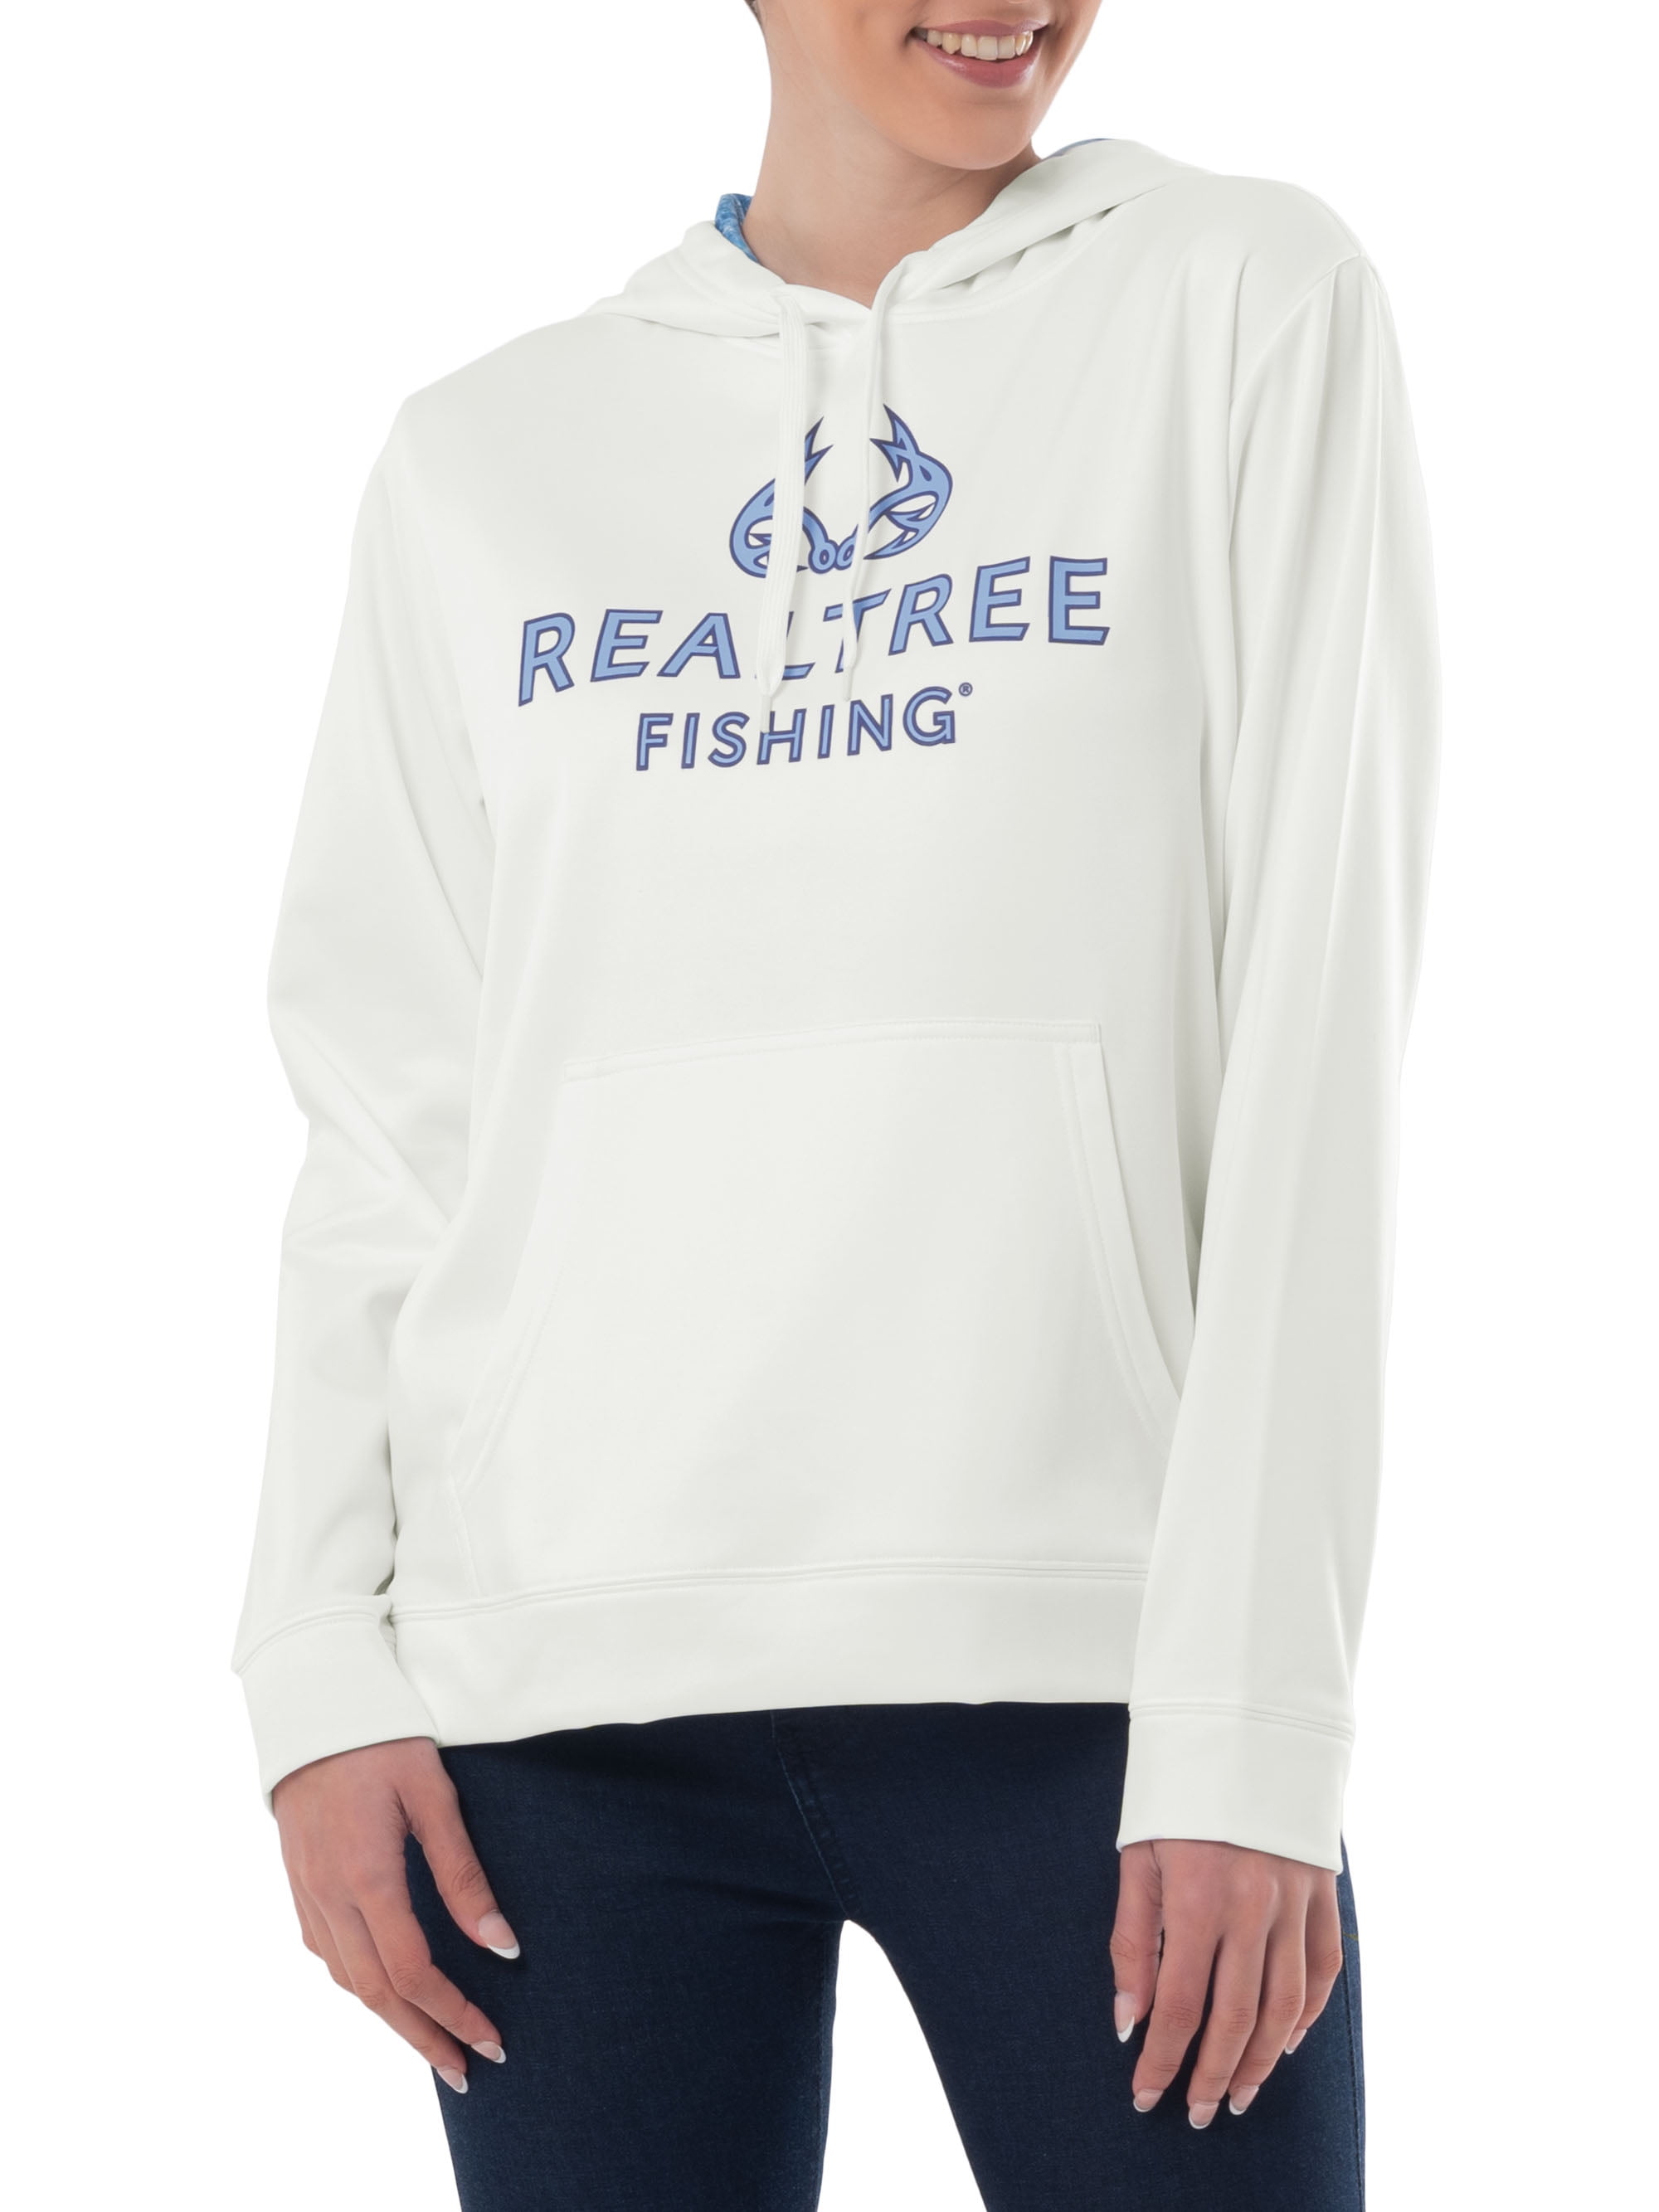 Realtree Women's Fishing Performance Hoodie, Size: XL, White